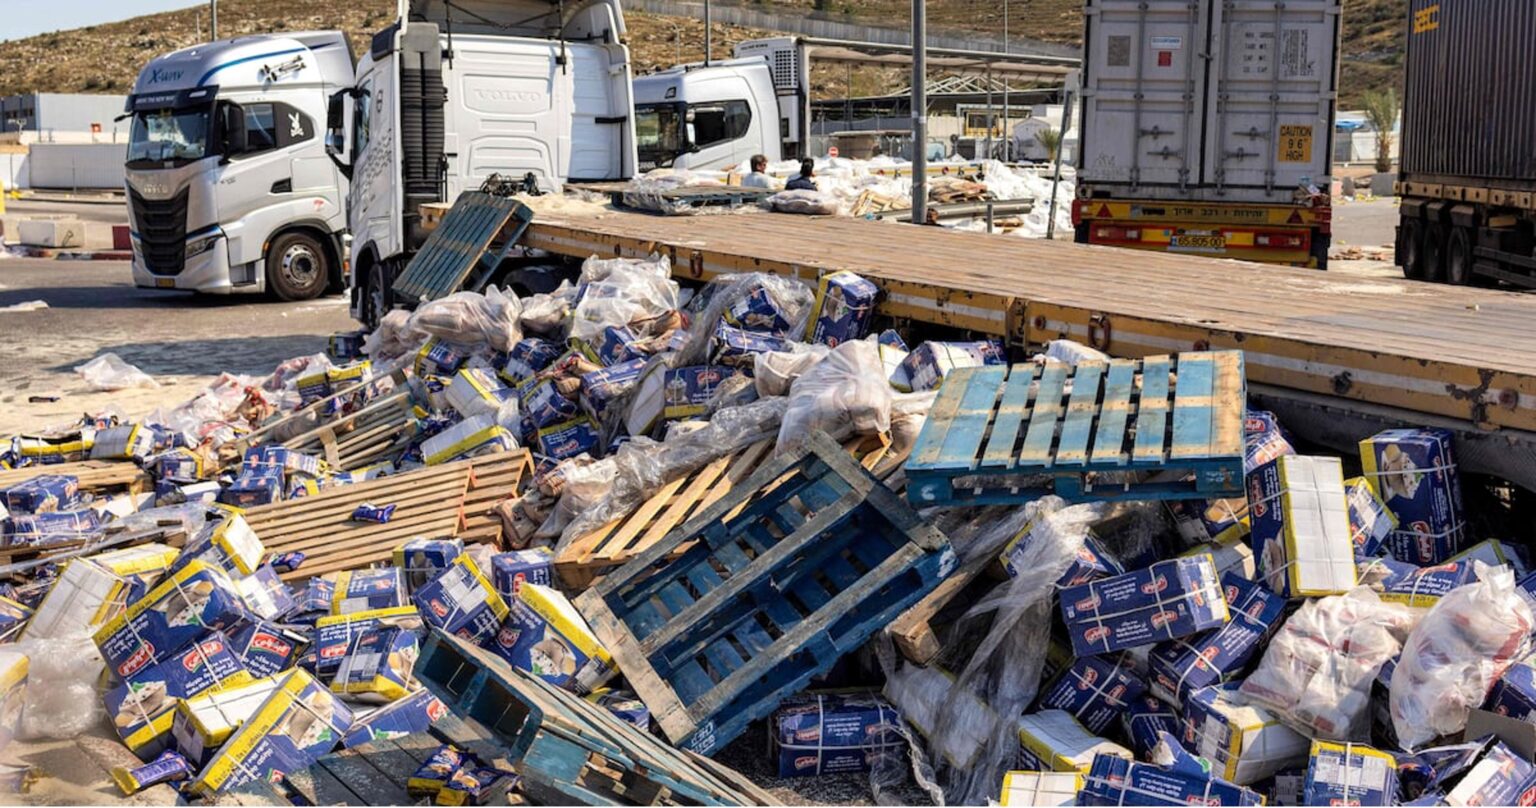 Israeli settlers destroy truckloads of aid, as Israeli forces watch, Gazans starve – Day 220